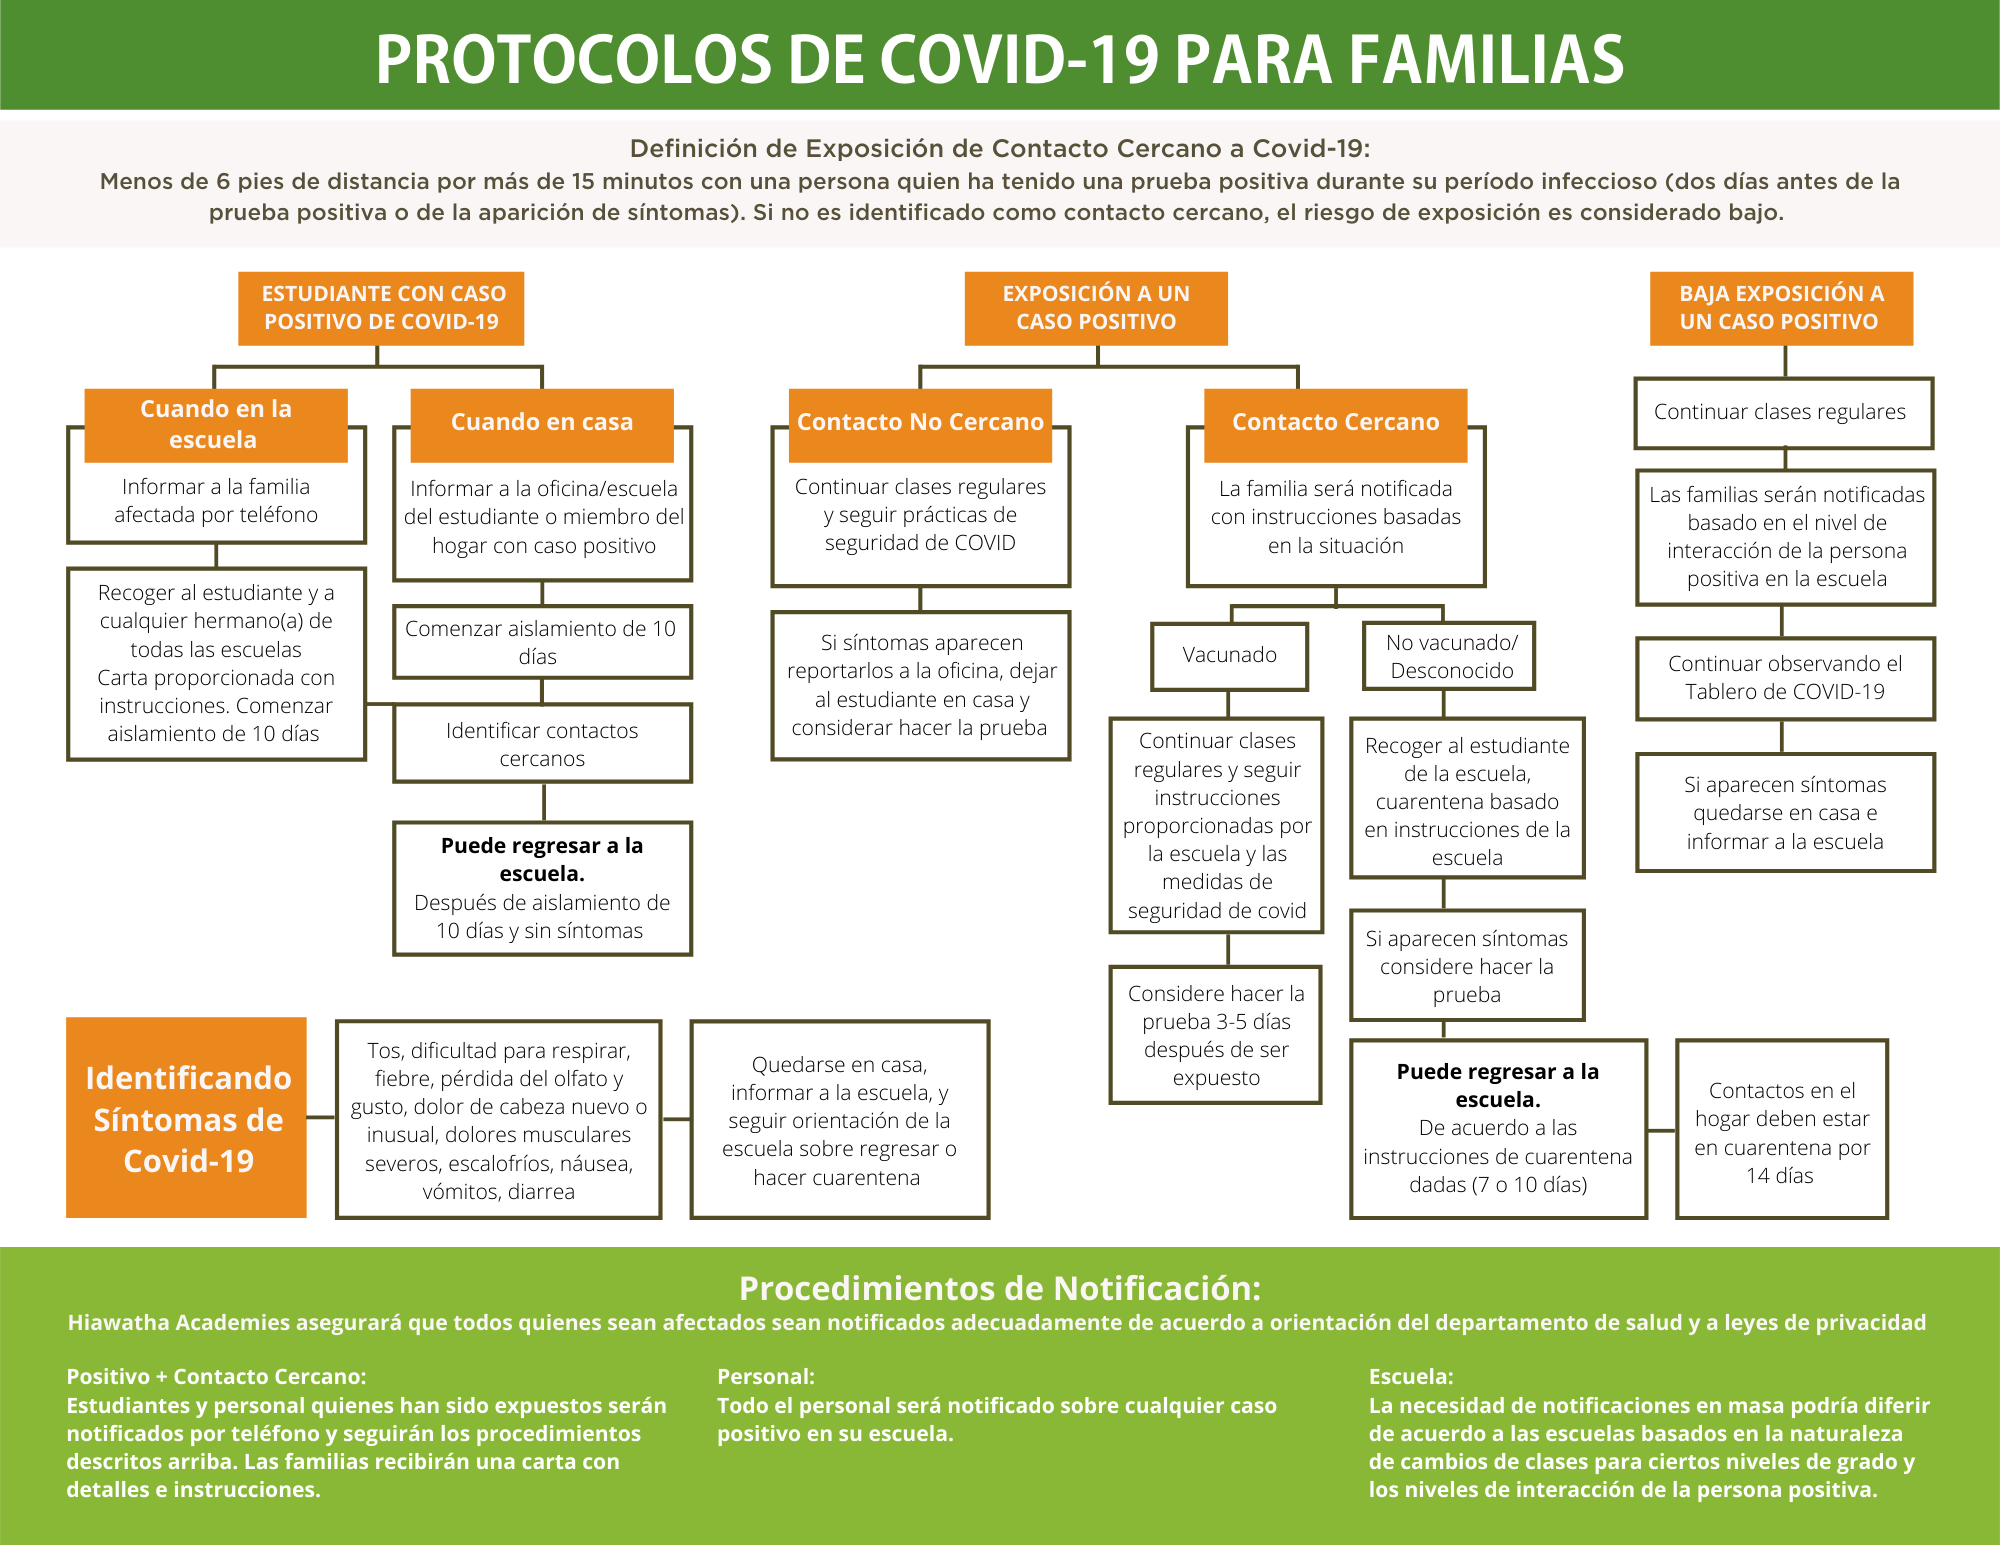 Covid-19 Protocols para Familias